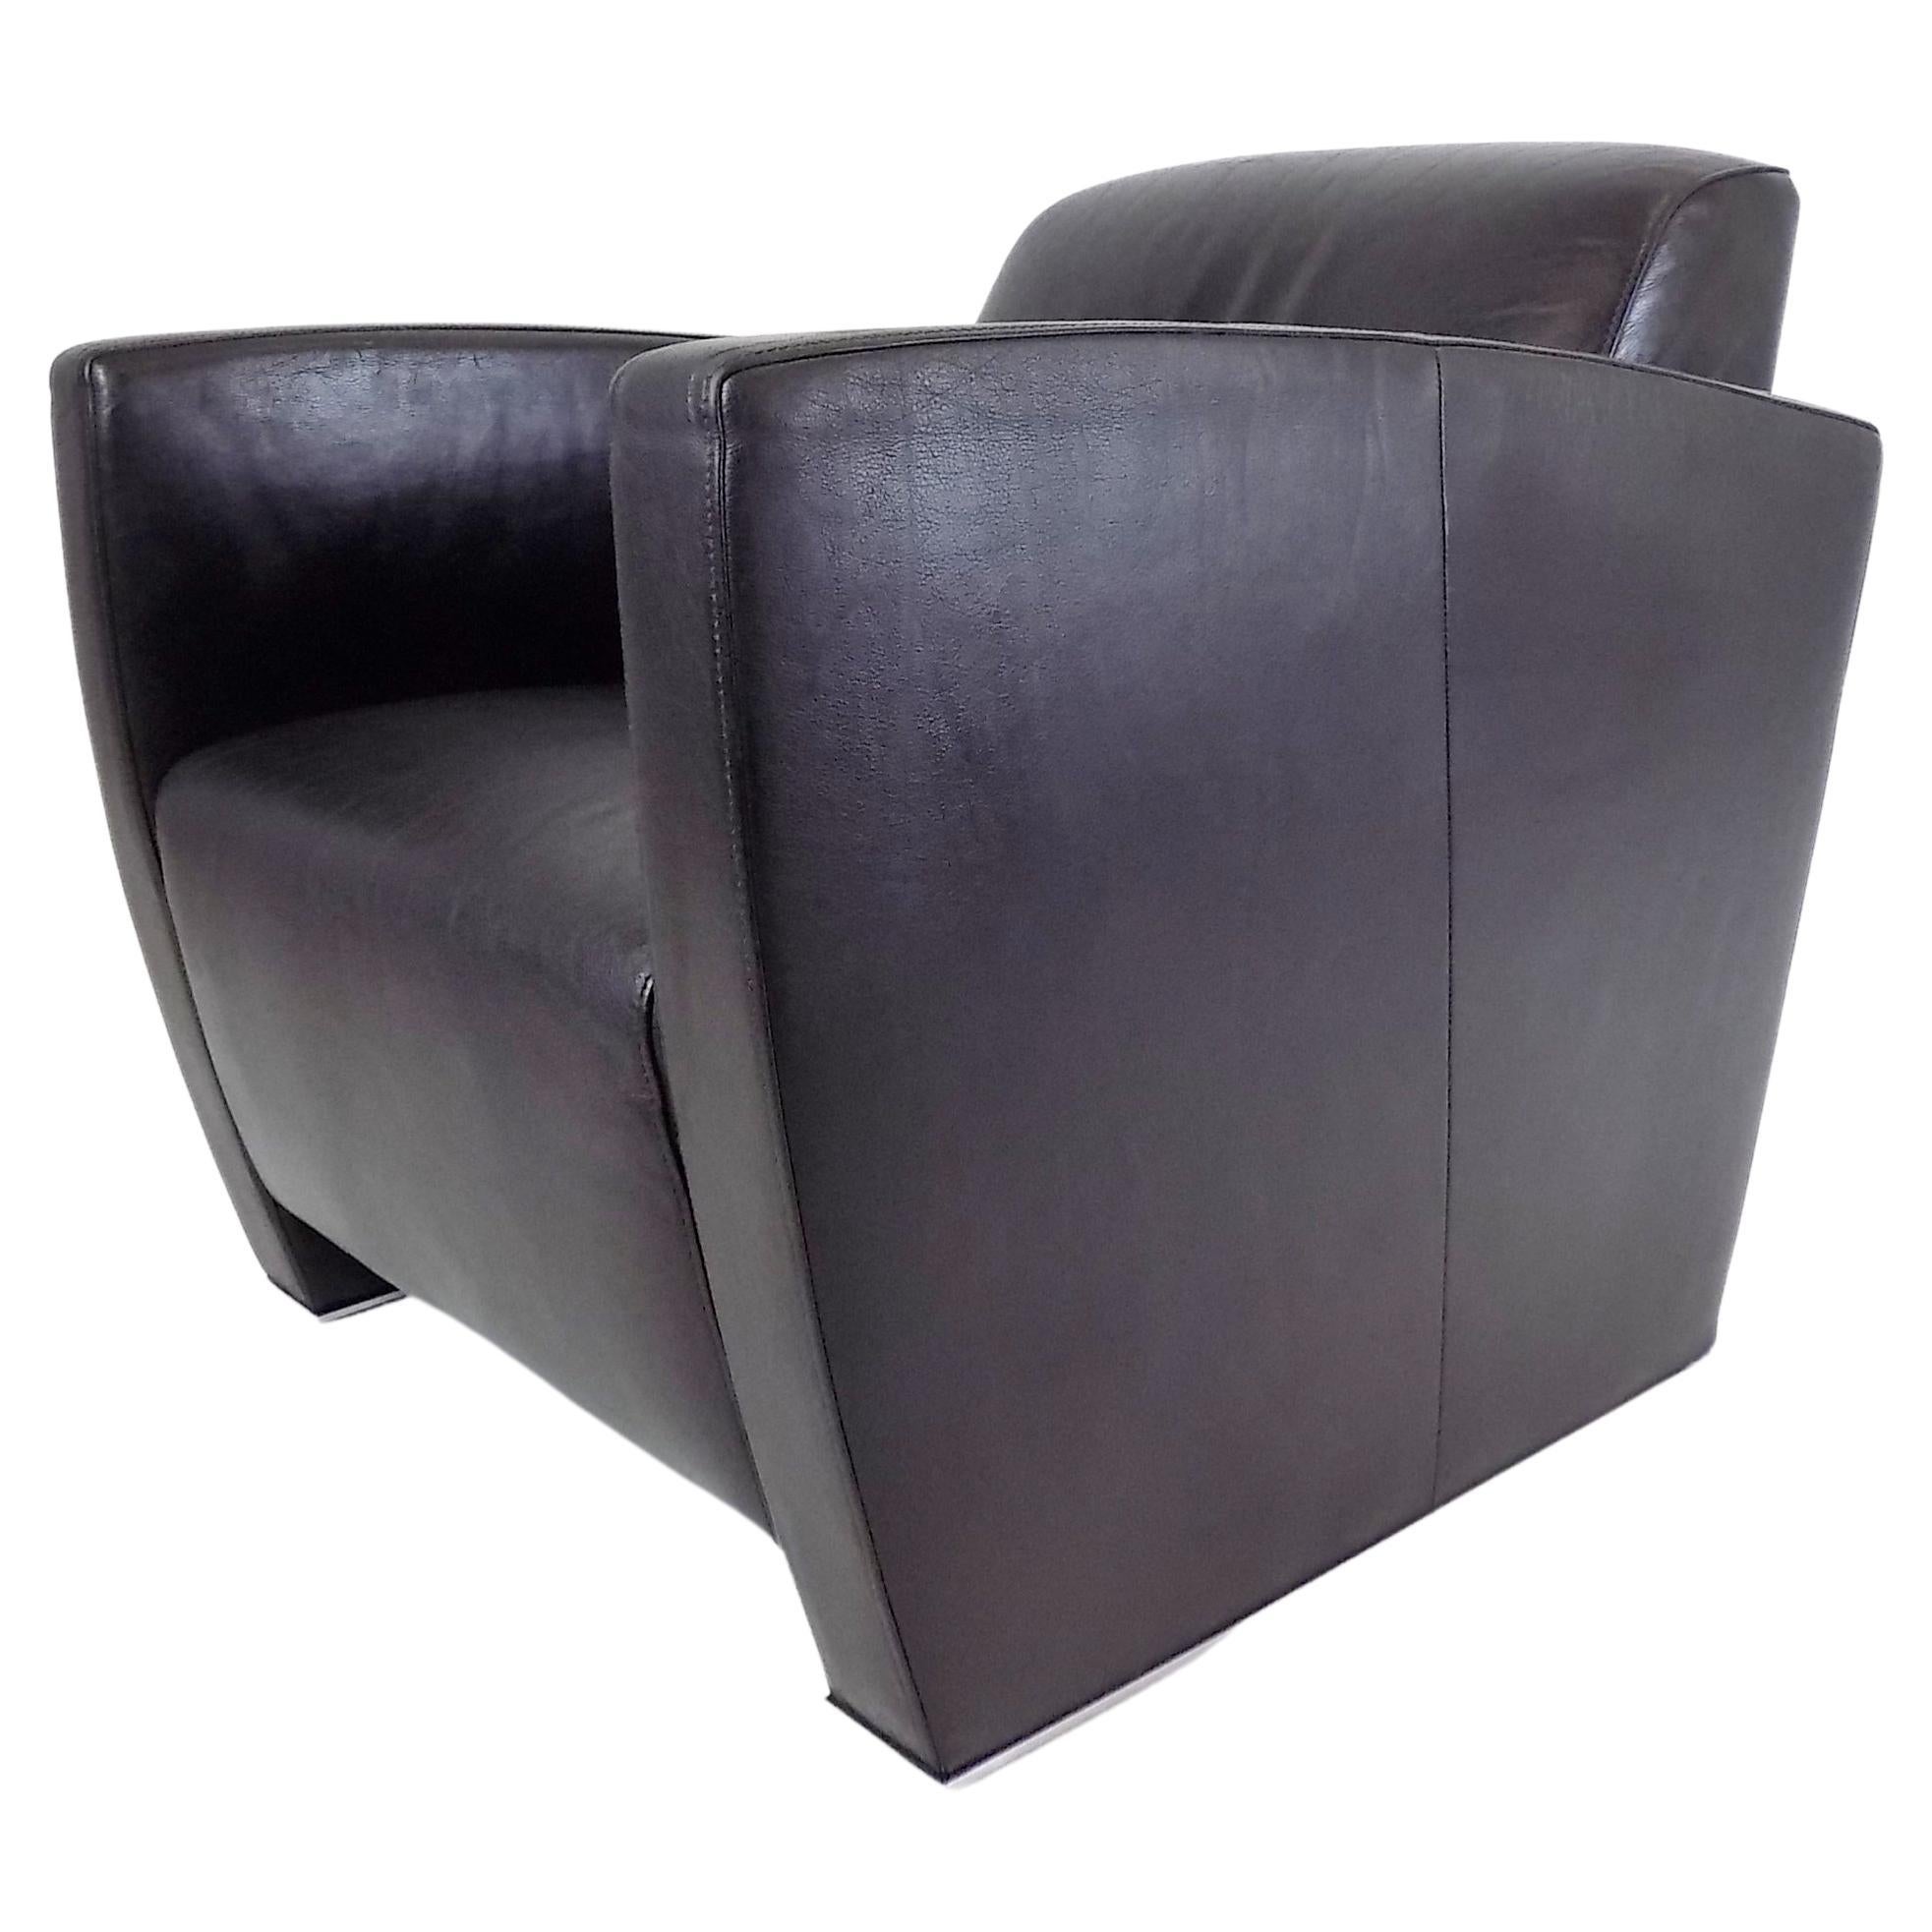 De Sede DS 420 leather armchair by Jean-Pierre Dovat